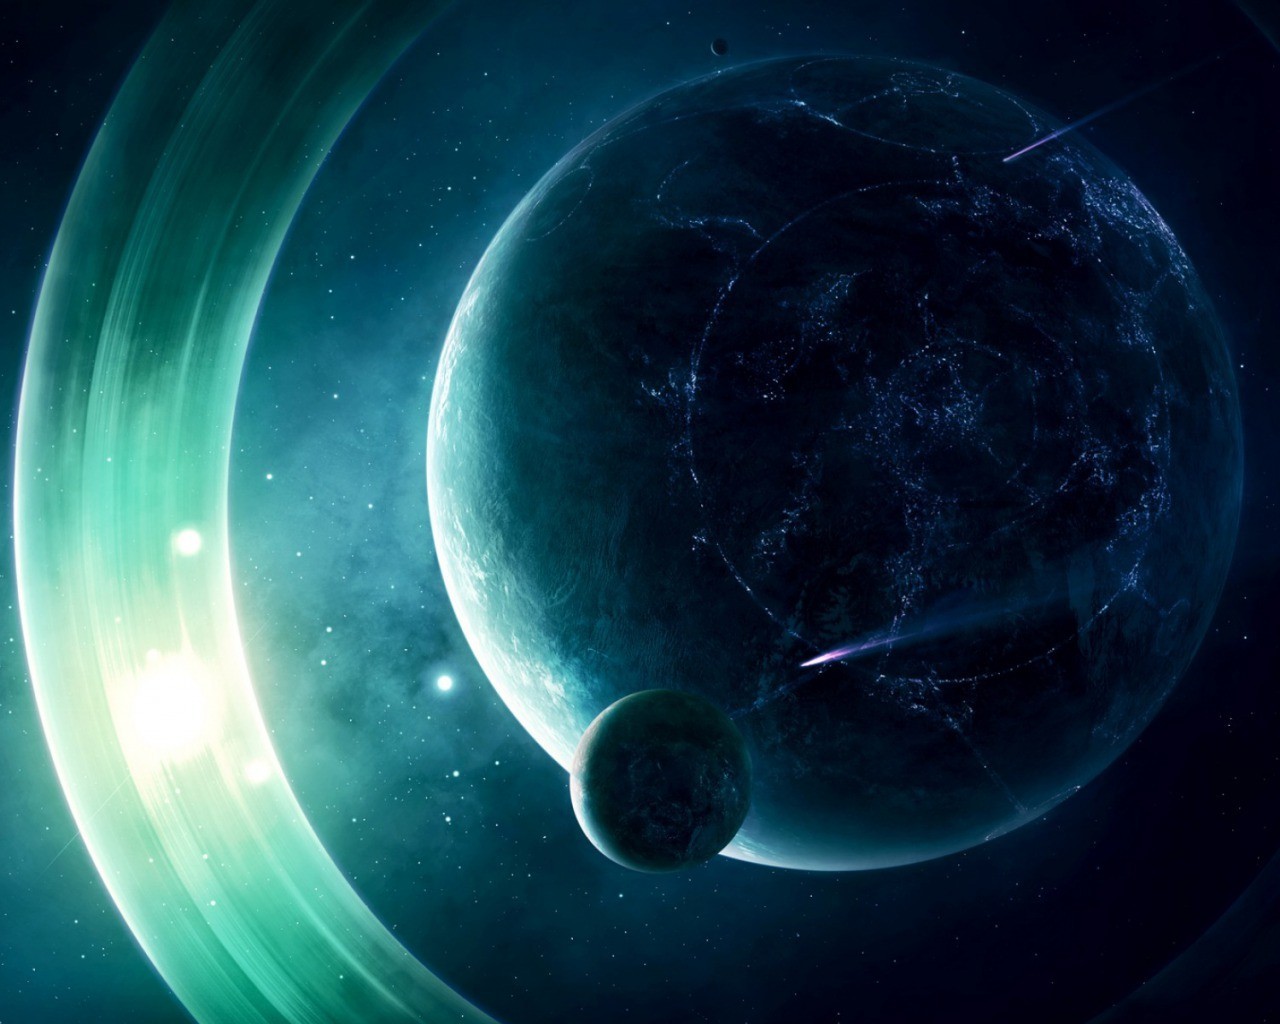 Alien Planet With Rings - HD Wallpaper 